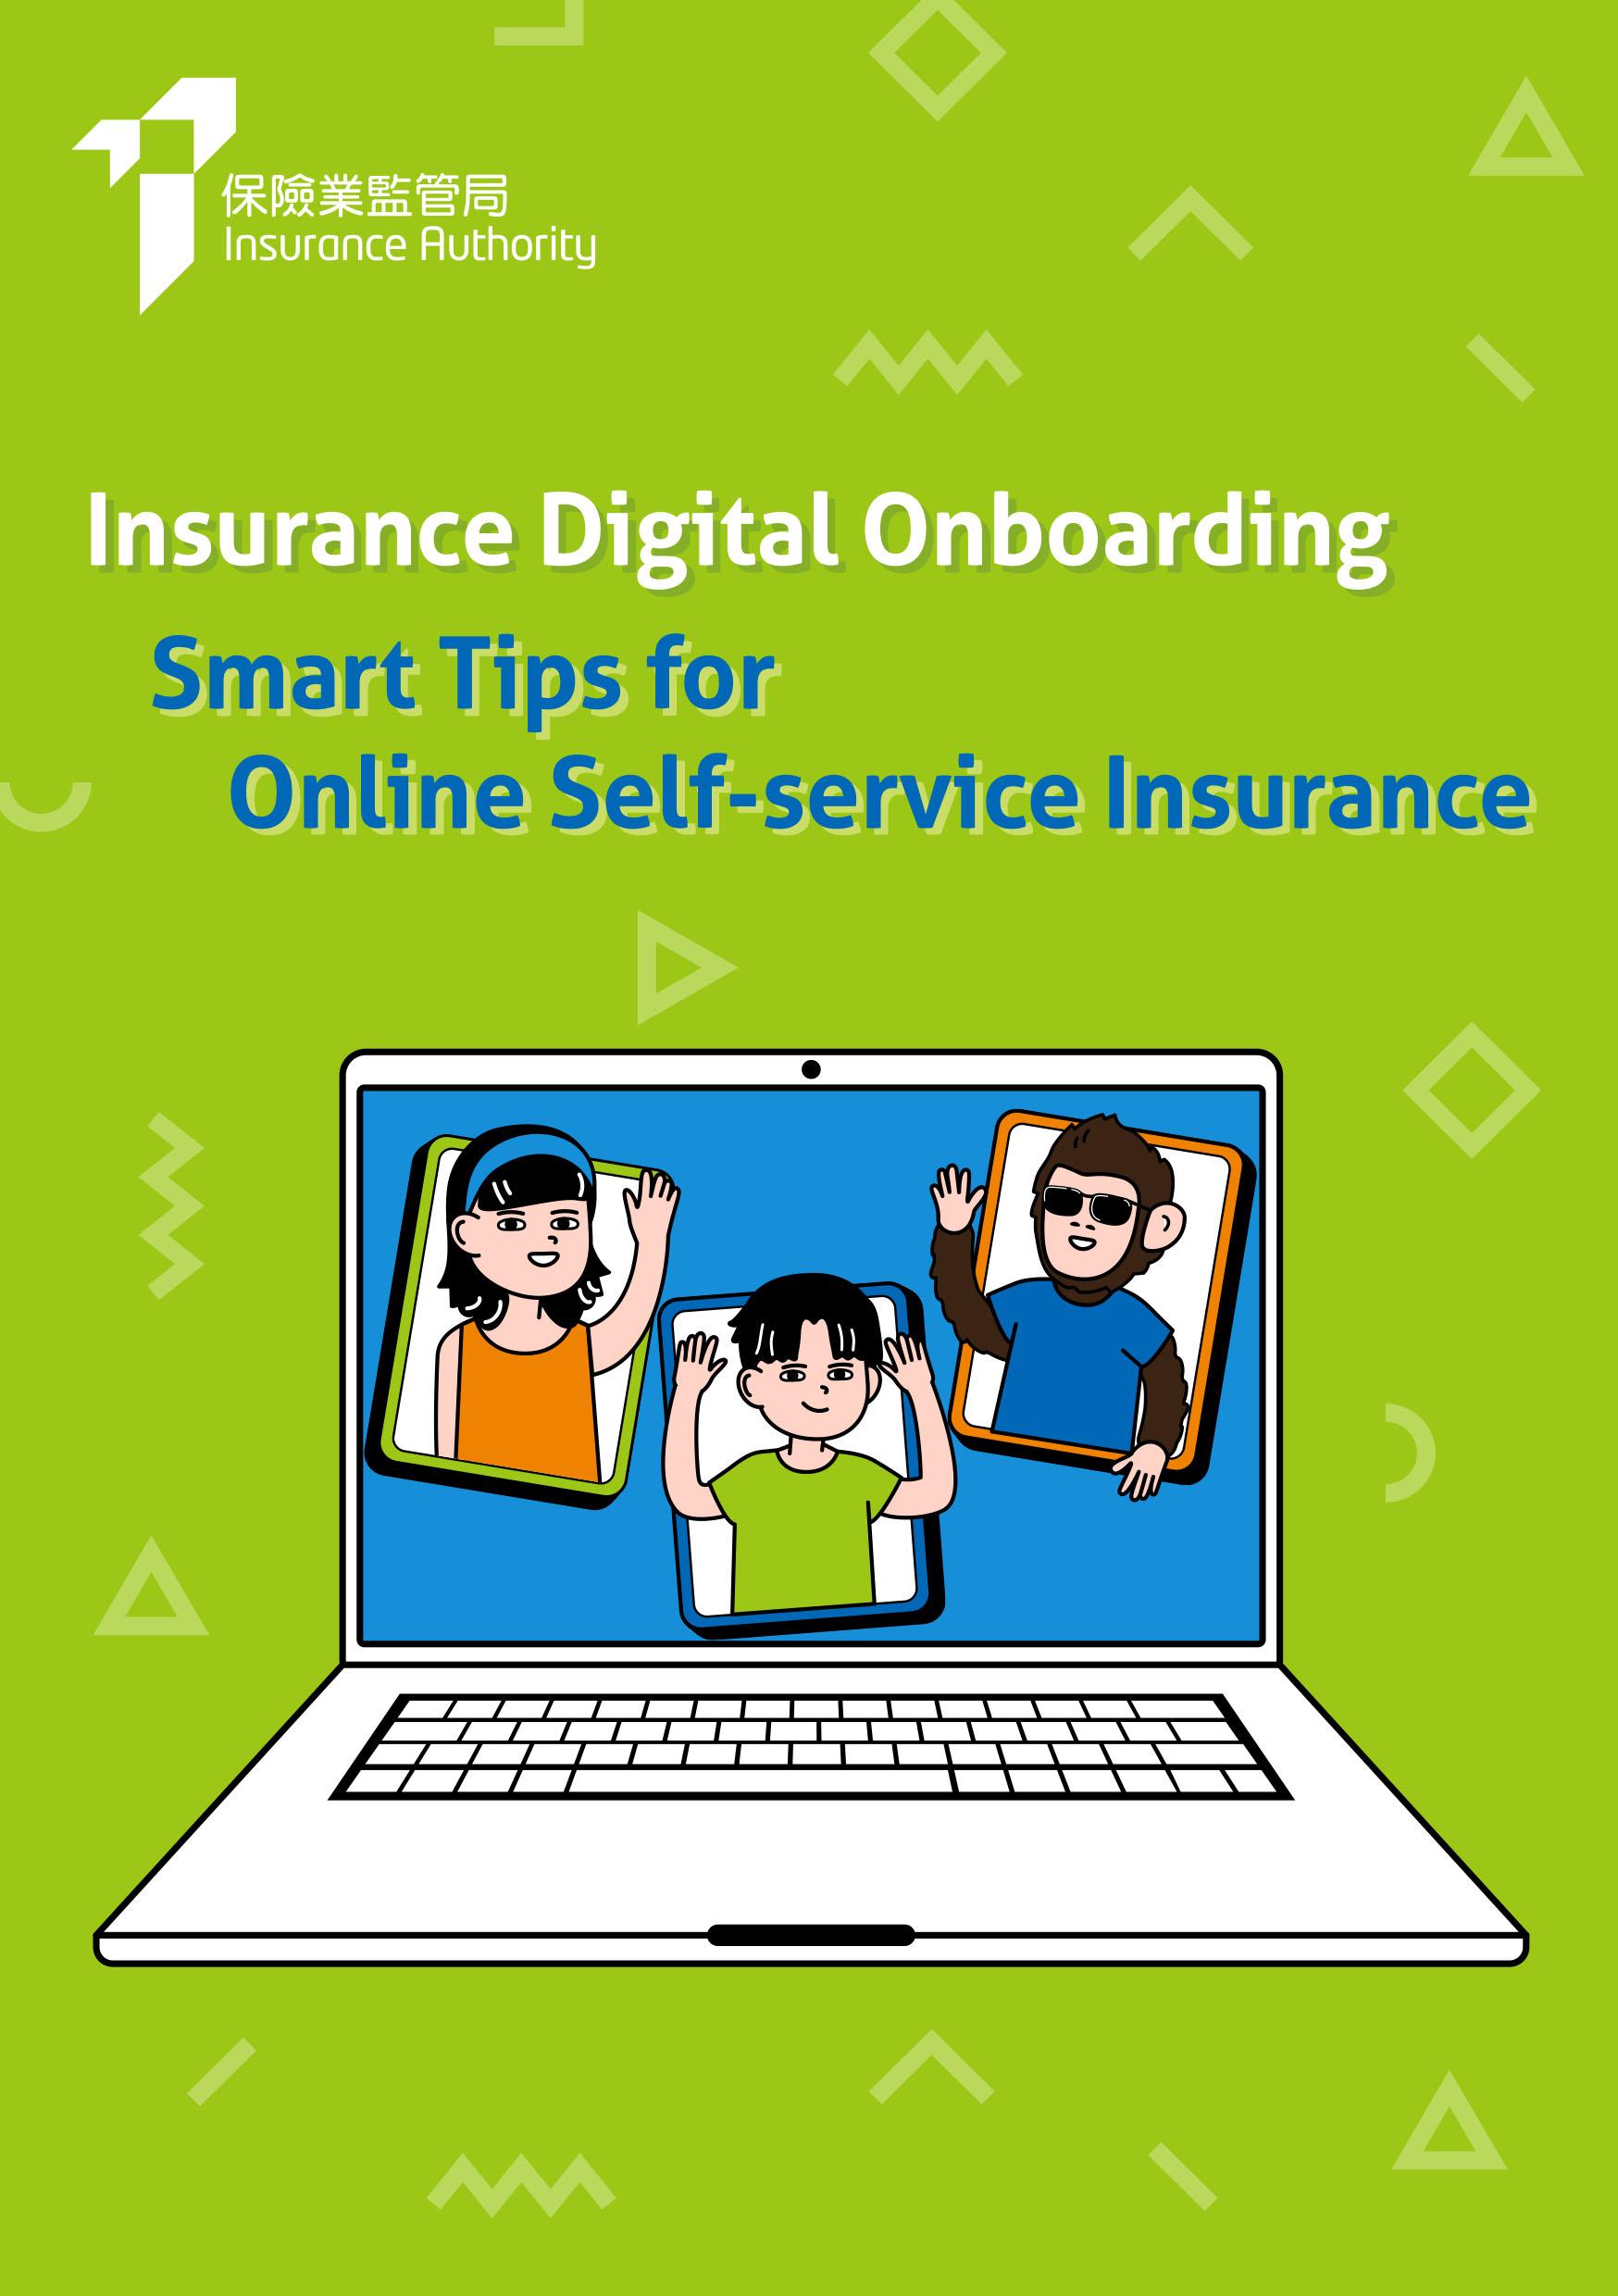 Insurance Digital Onboarding - Smart Tips for Online Self-service Insurance